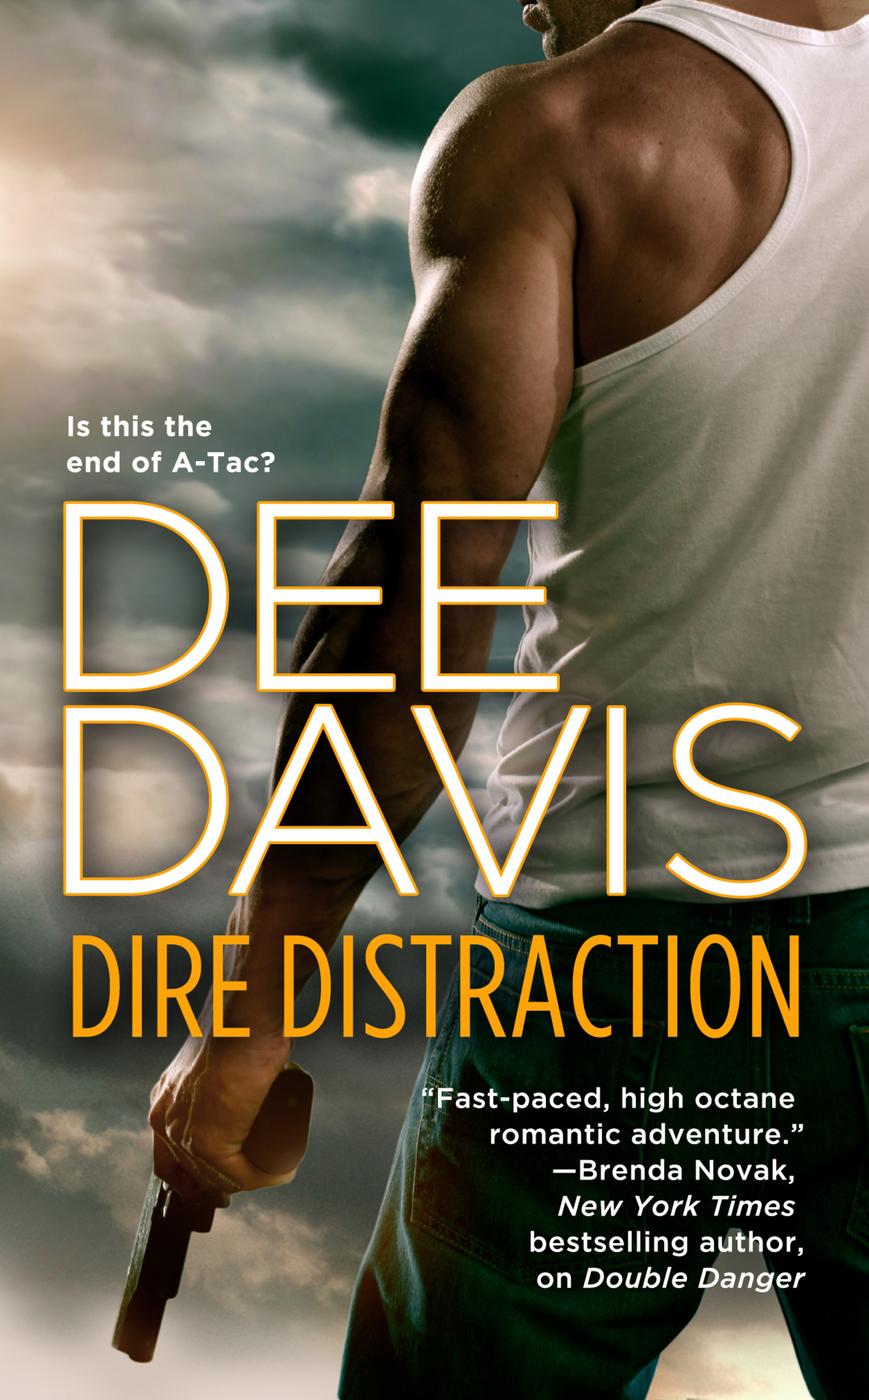 Dire Distraction (2013) by Dee Davis